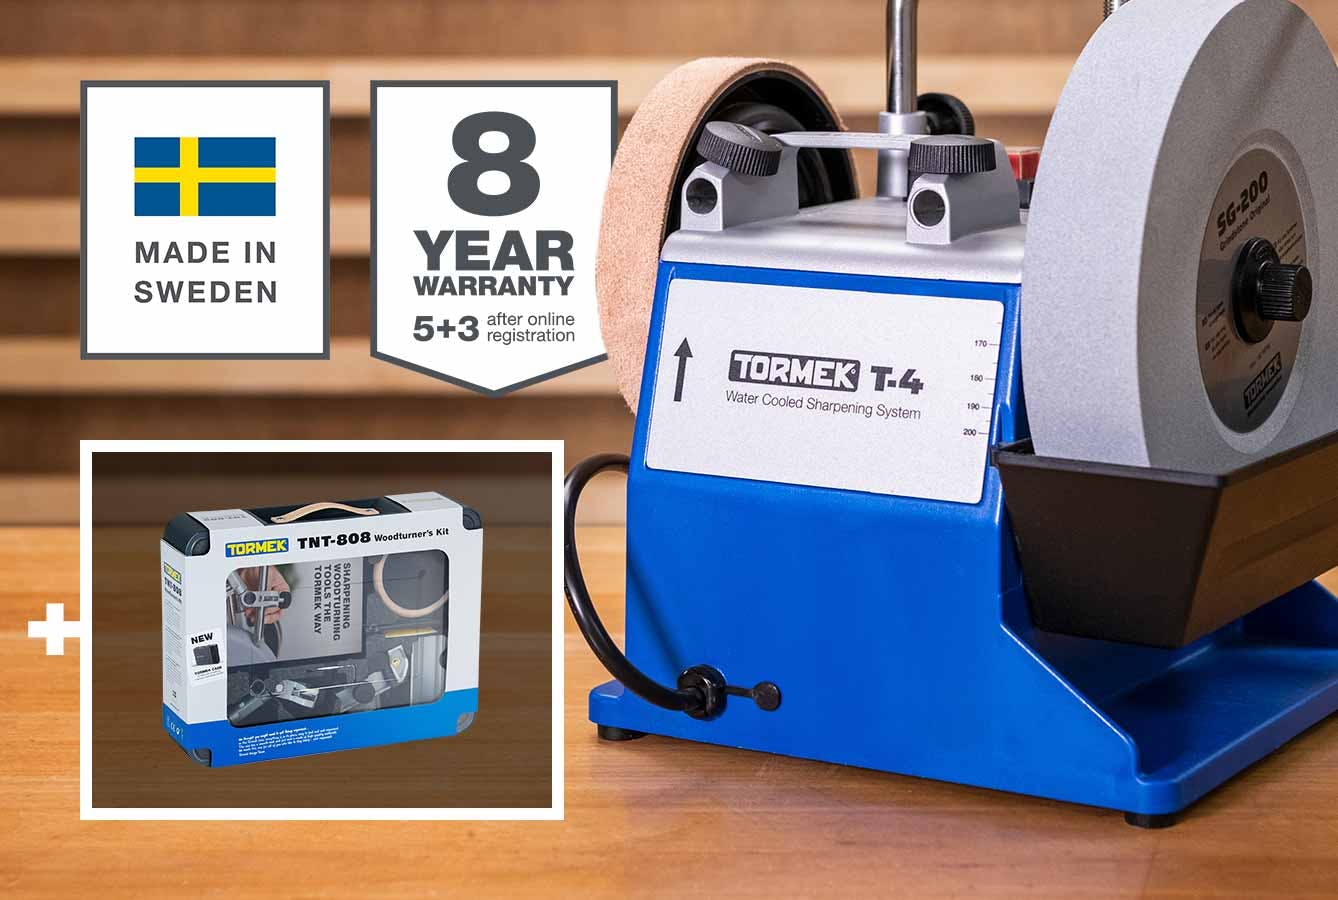 Made in Sweden - 8 Year Warranty